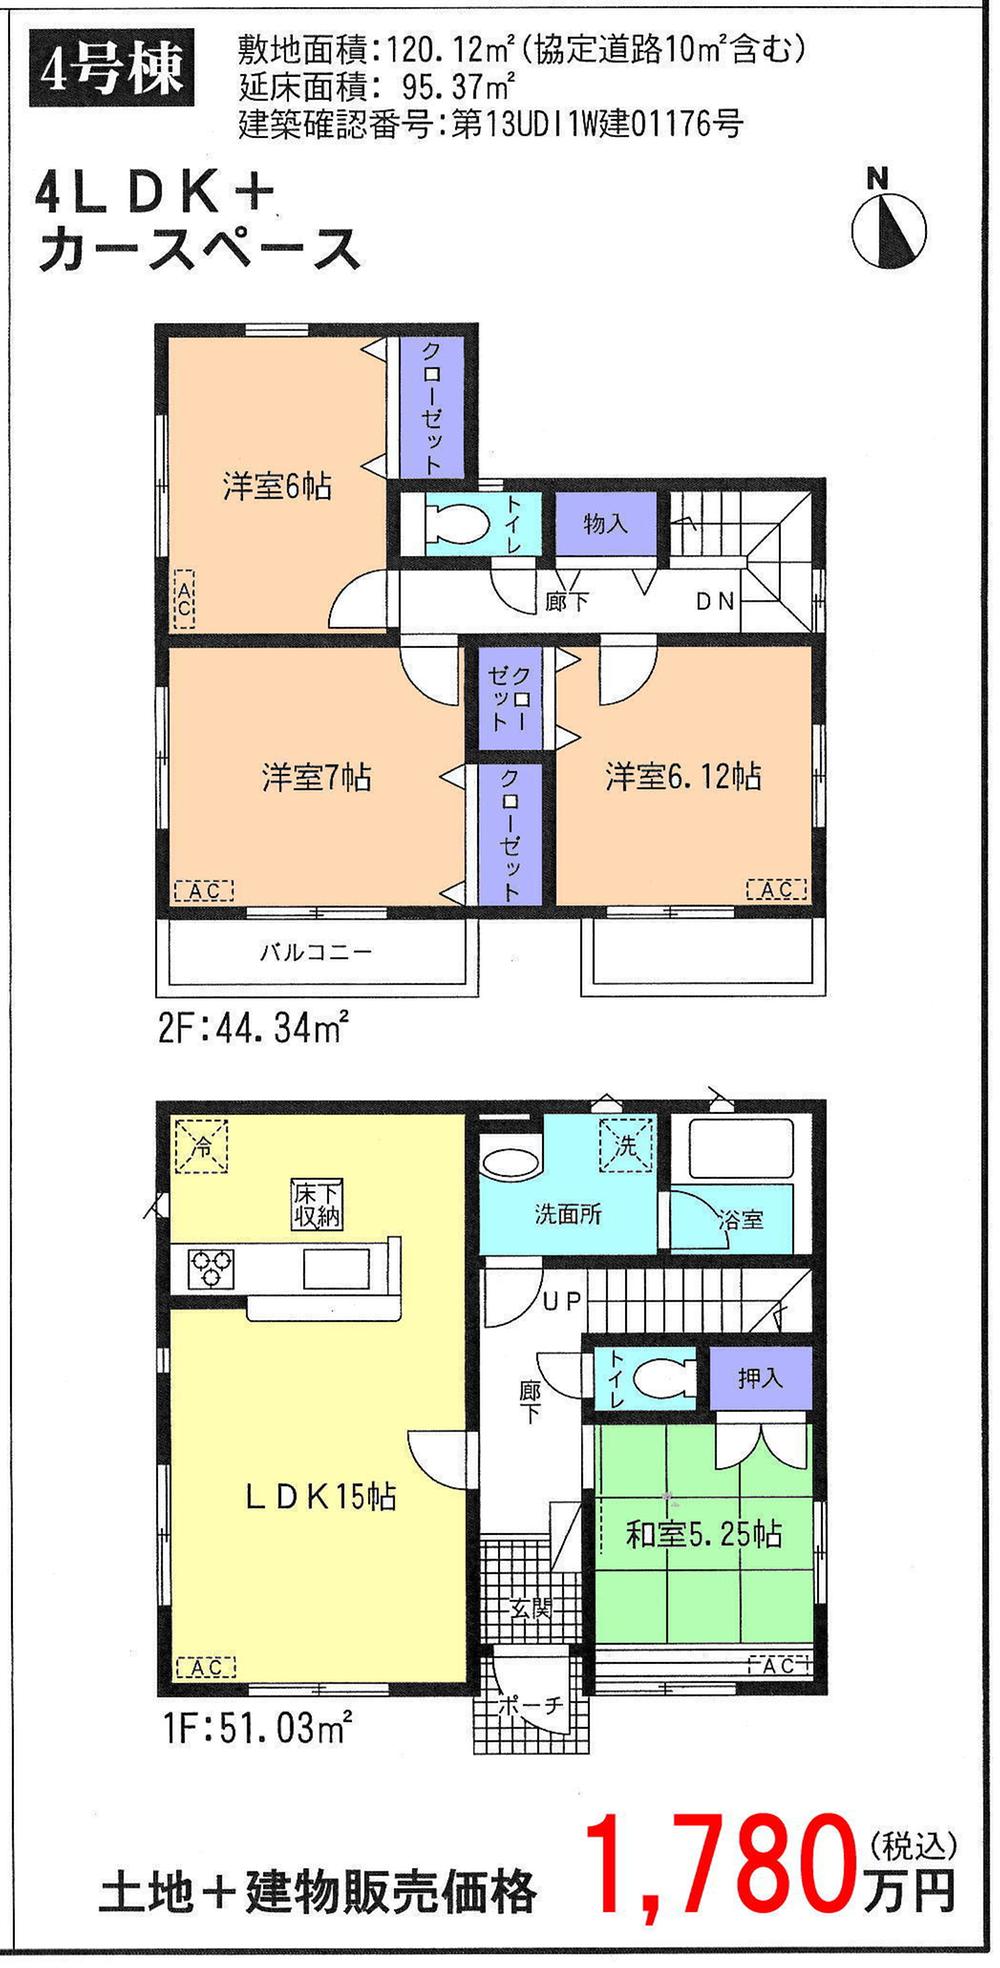 Floor plan. (4 Building), Price 17.8 million yen, 4LDK, Land area 120.12 sq m , Building area 95.37 sq m